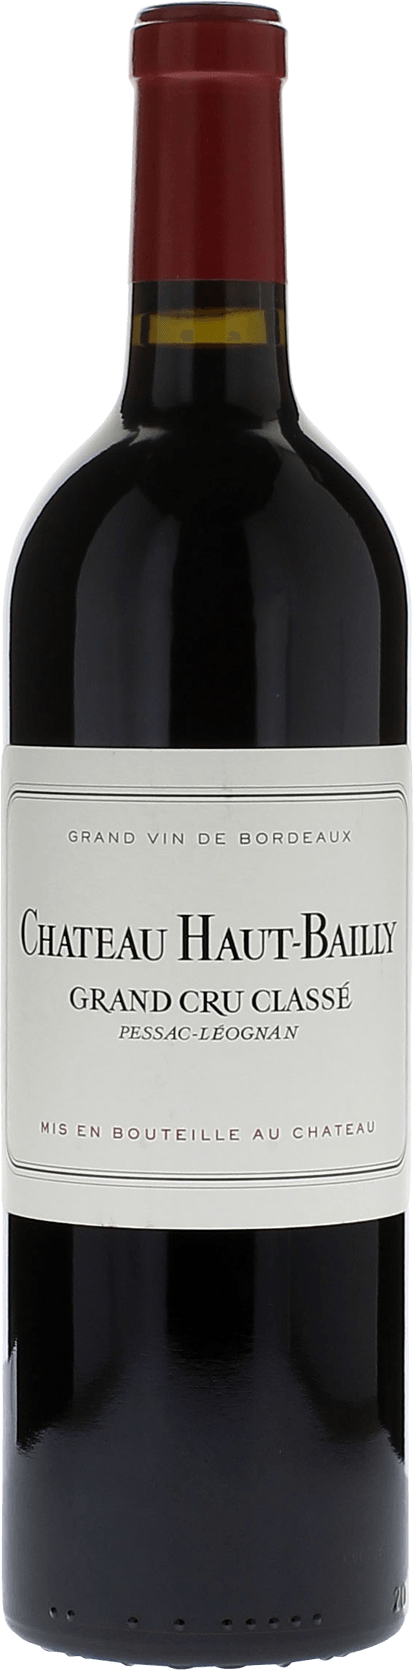 Haut bailly 1989 cru class Pessac-Lognan, Bordeaux rouge